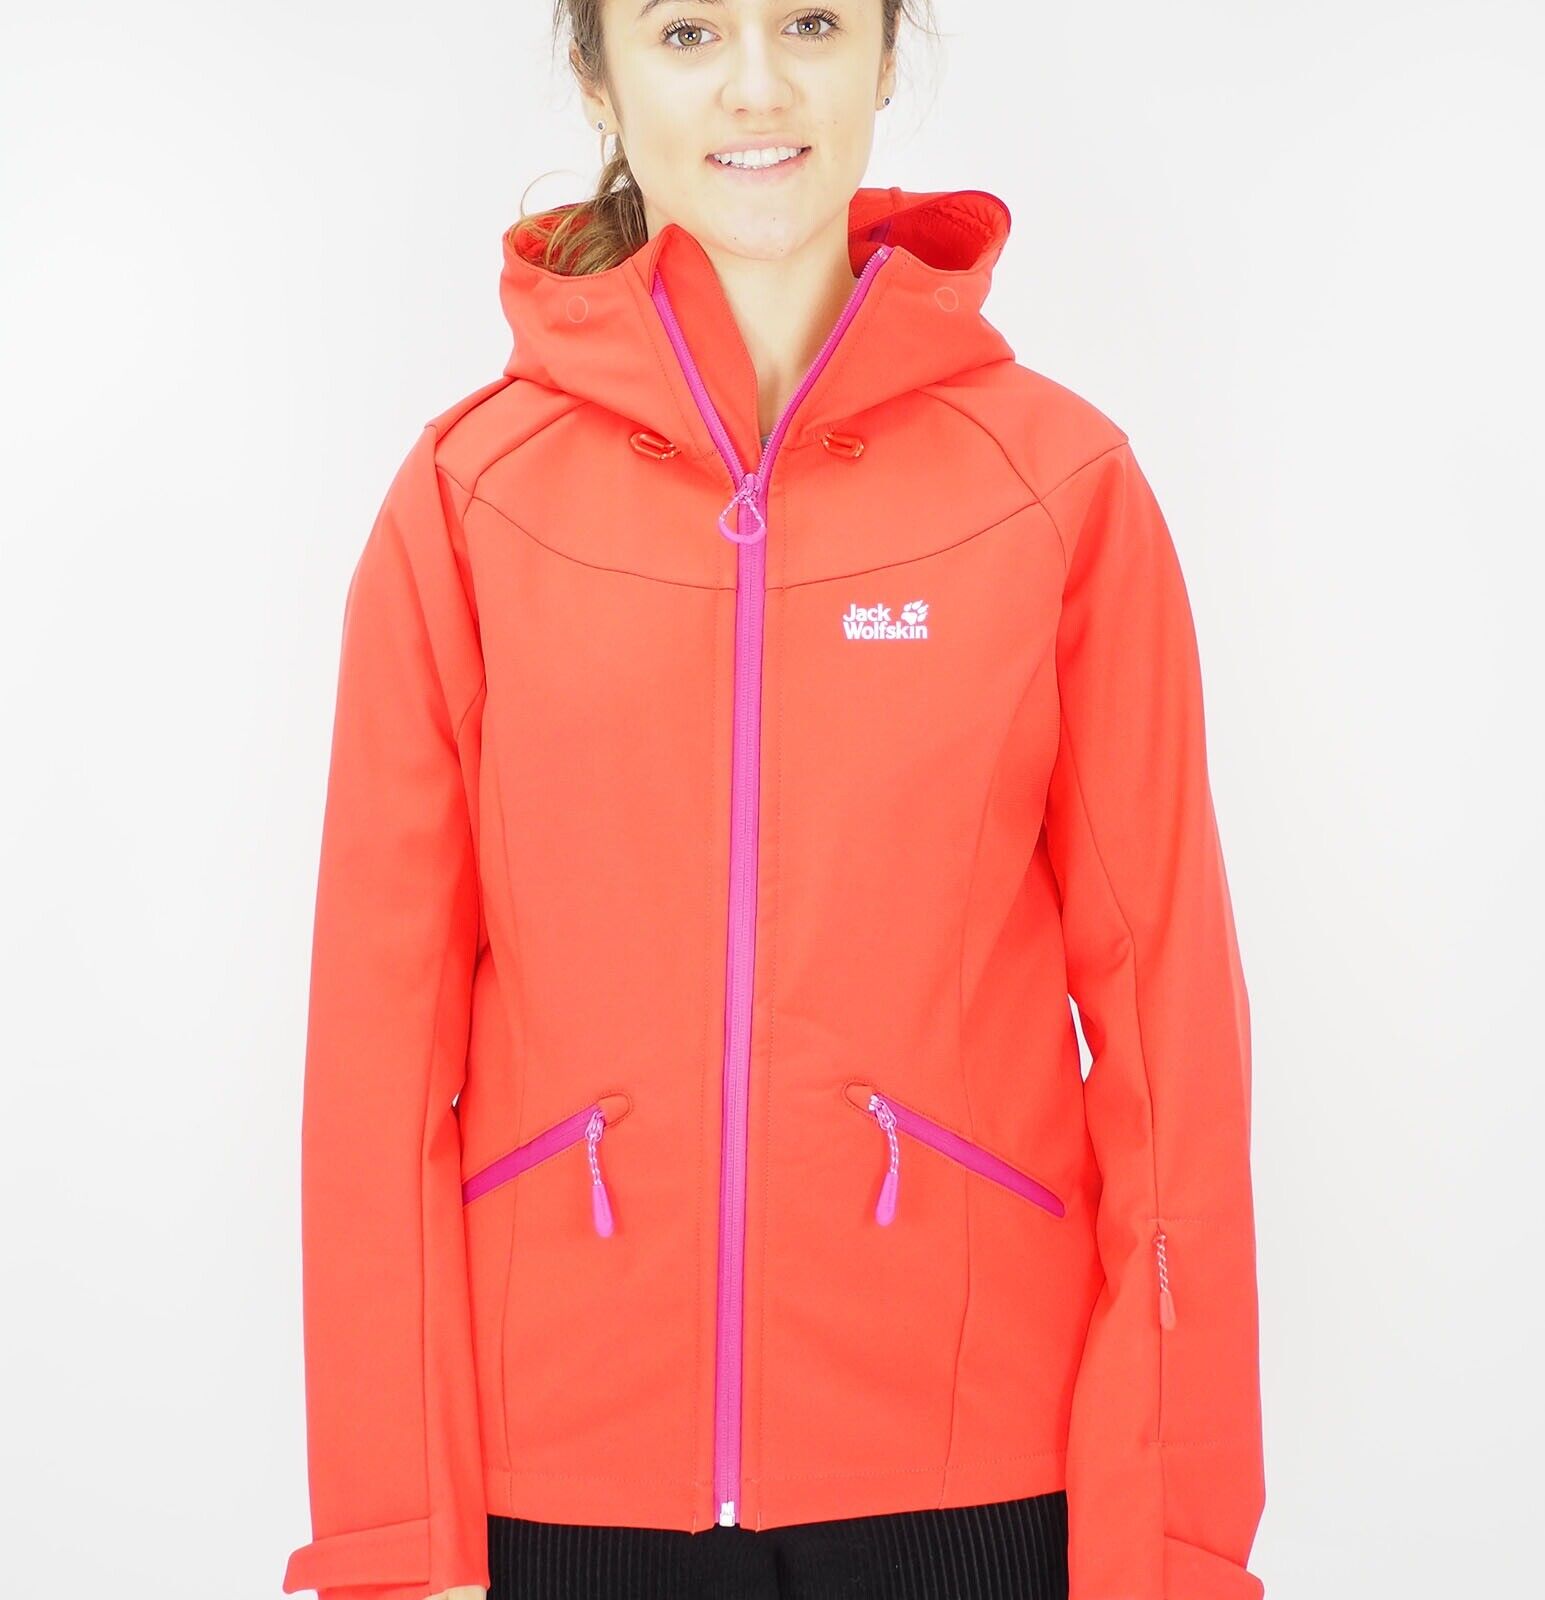 Womens Jack Wolfskin Snow Sports 1306291 Orange Coral Warm Windproof Jacket